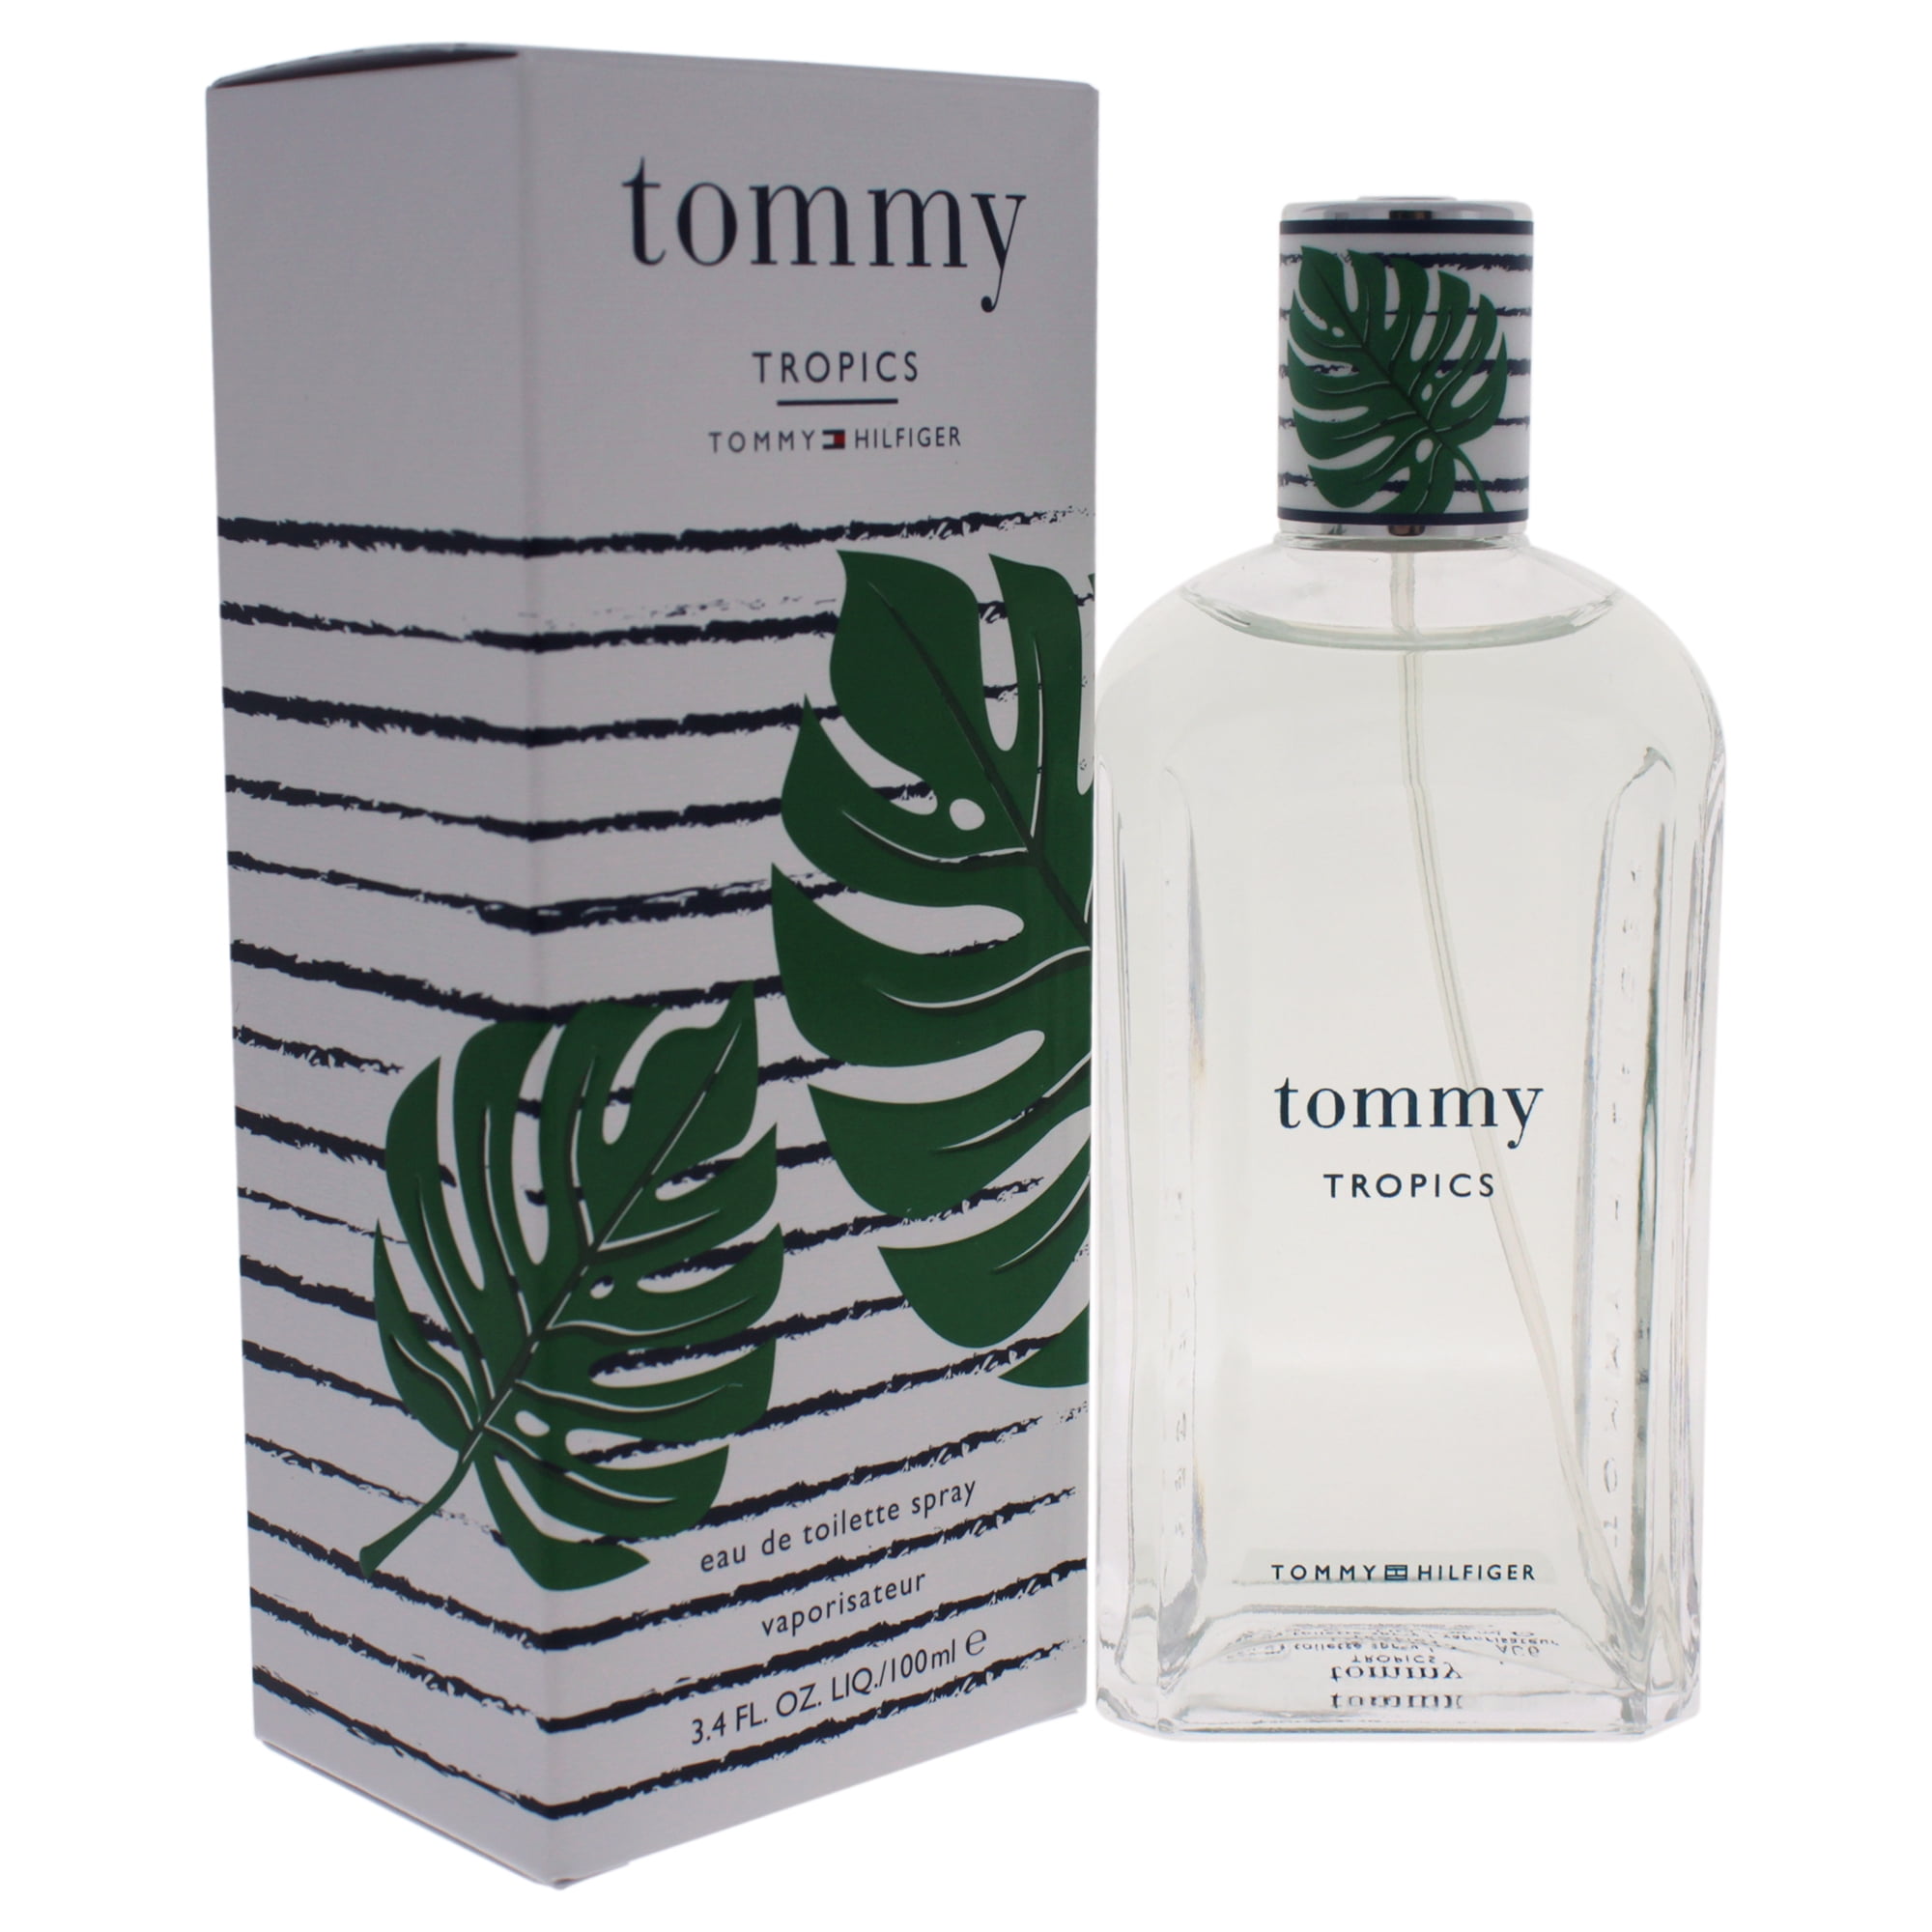 reservedele båd Slikke Tommy Hilfiger Beauty Tommy Tropics Eau de Toilette, Cologne for Men, 3.4  Oz - Walmart.com